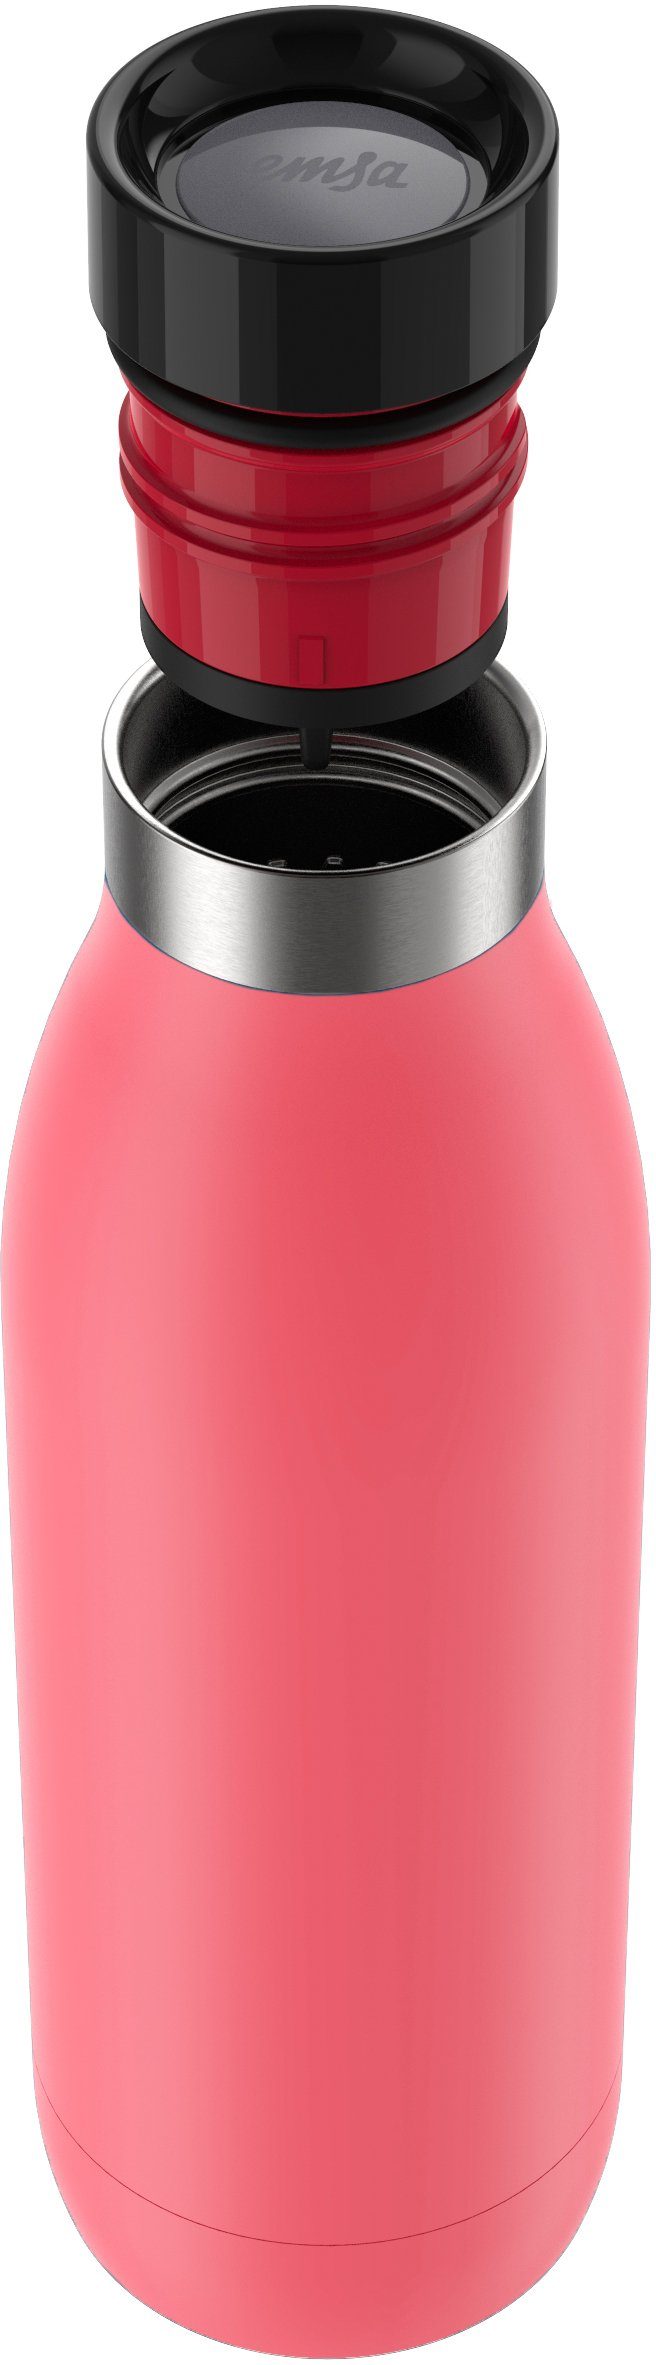 Emsa Trinkflasche Edelstahl, Bludrop spülmaschinenfest Color, warm/24h Quick-Press kühl, koralle Deckel, 12h